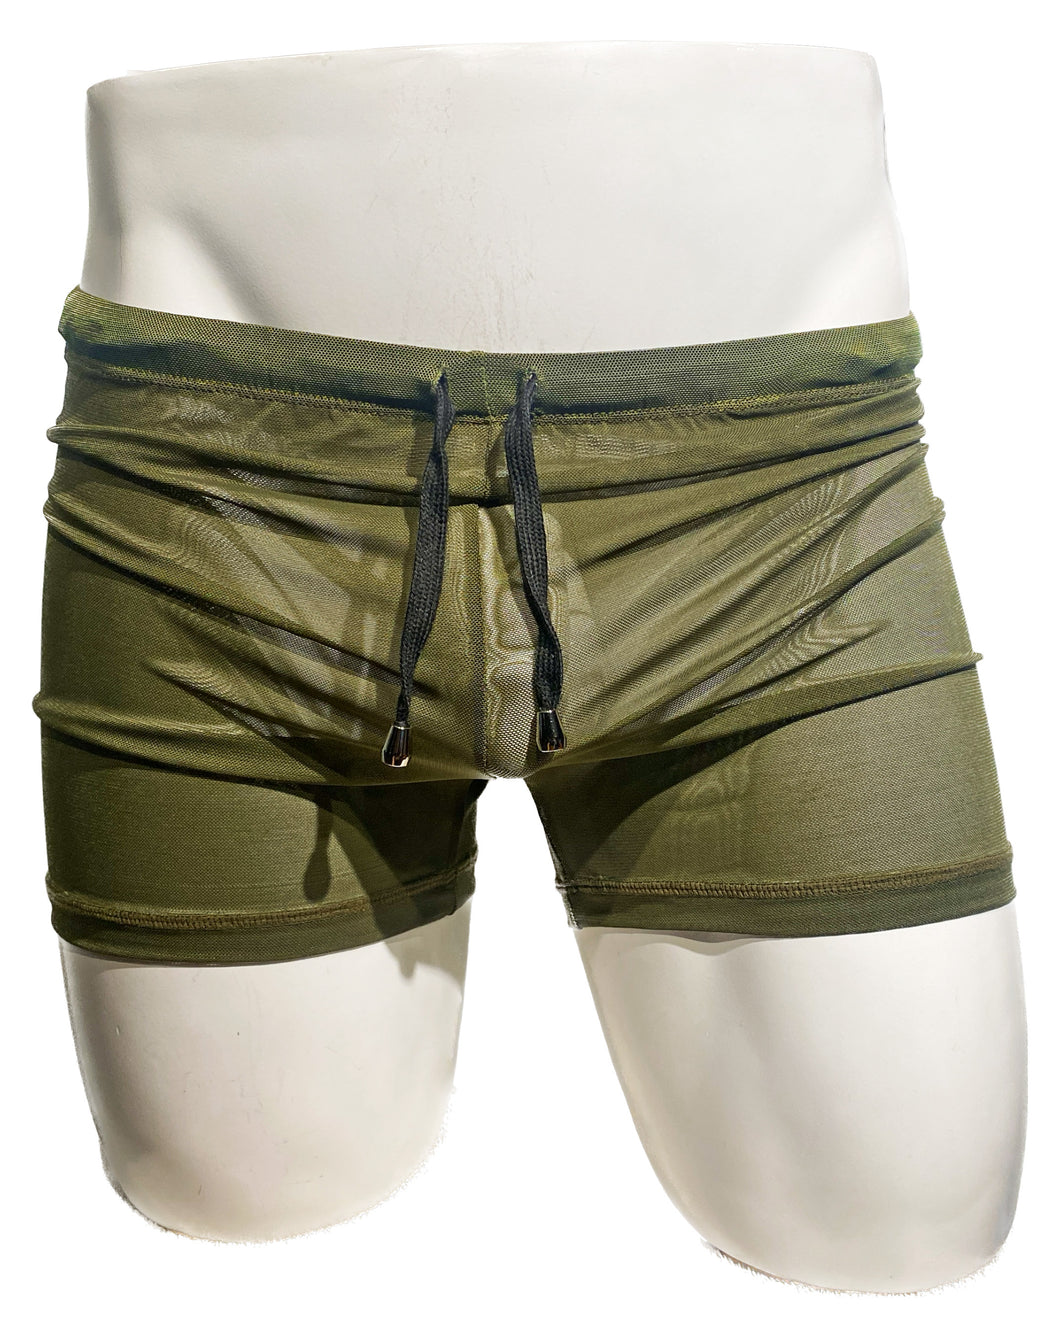 Fine Mesh Shorts - ARMY GREEN